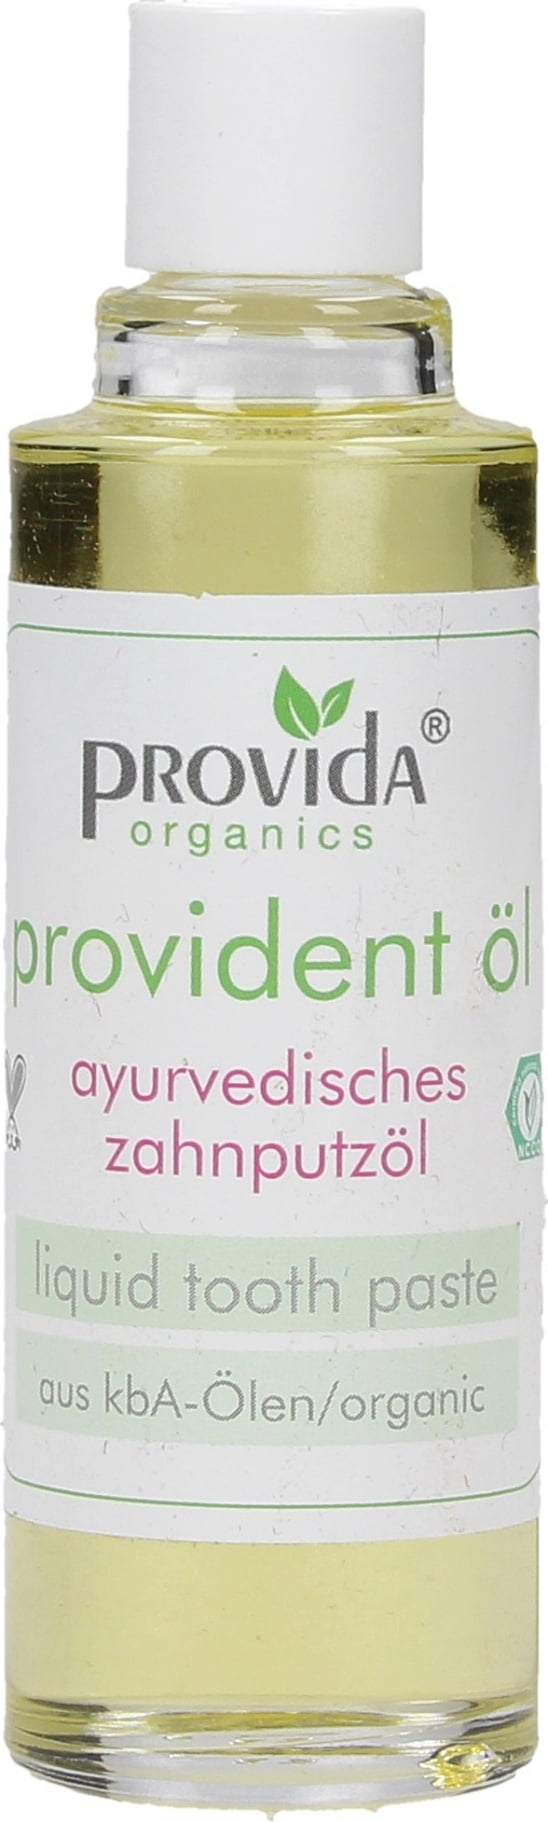 Provida Organics Provident Zahnputzöl